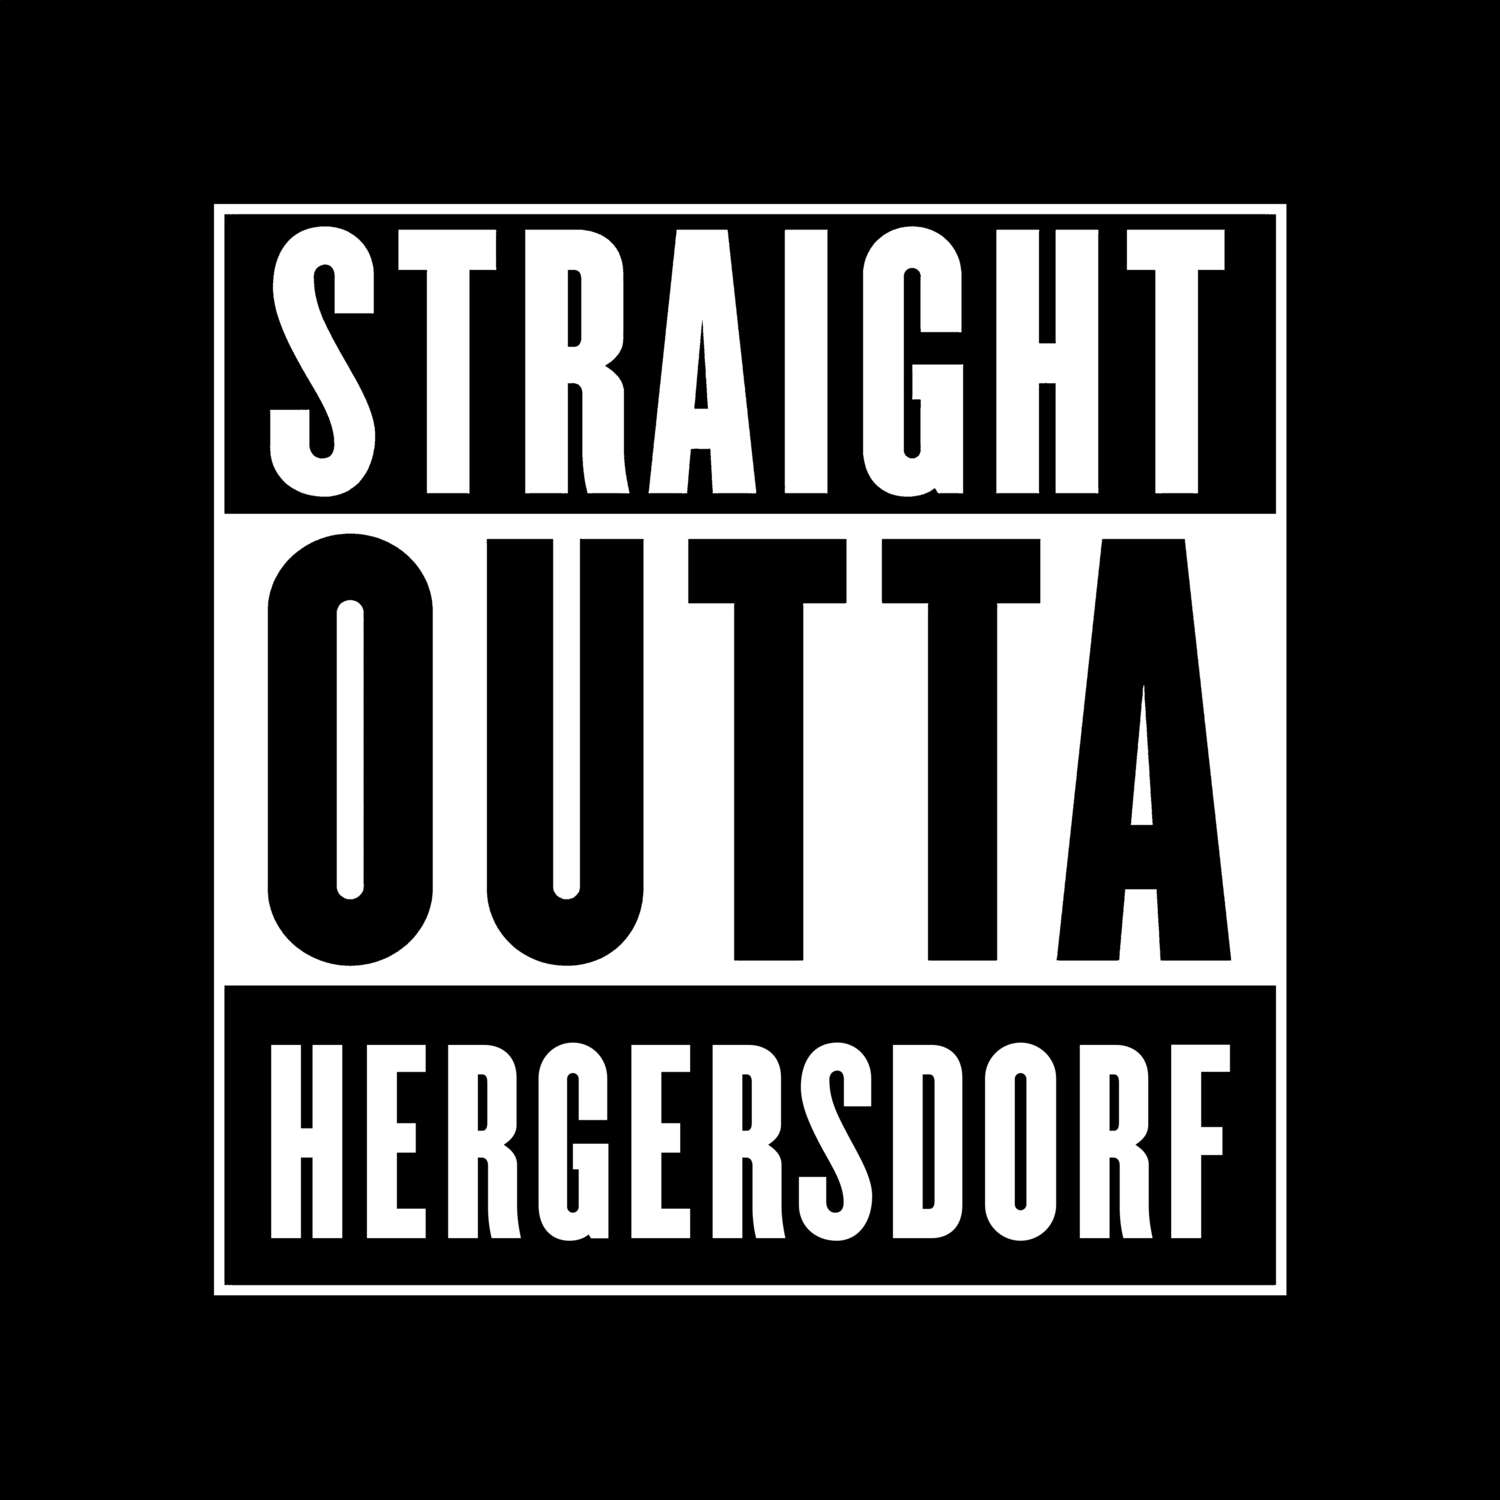 Hergersdorf T-Shirt »Straight Outta«